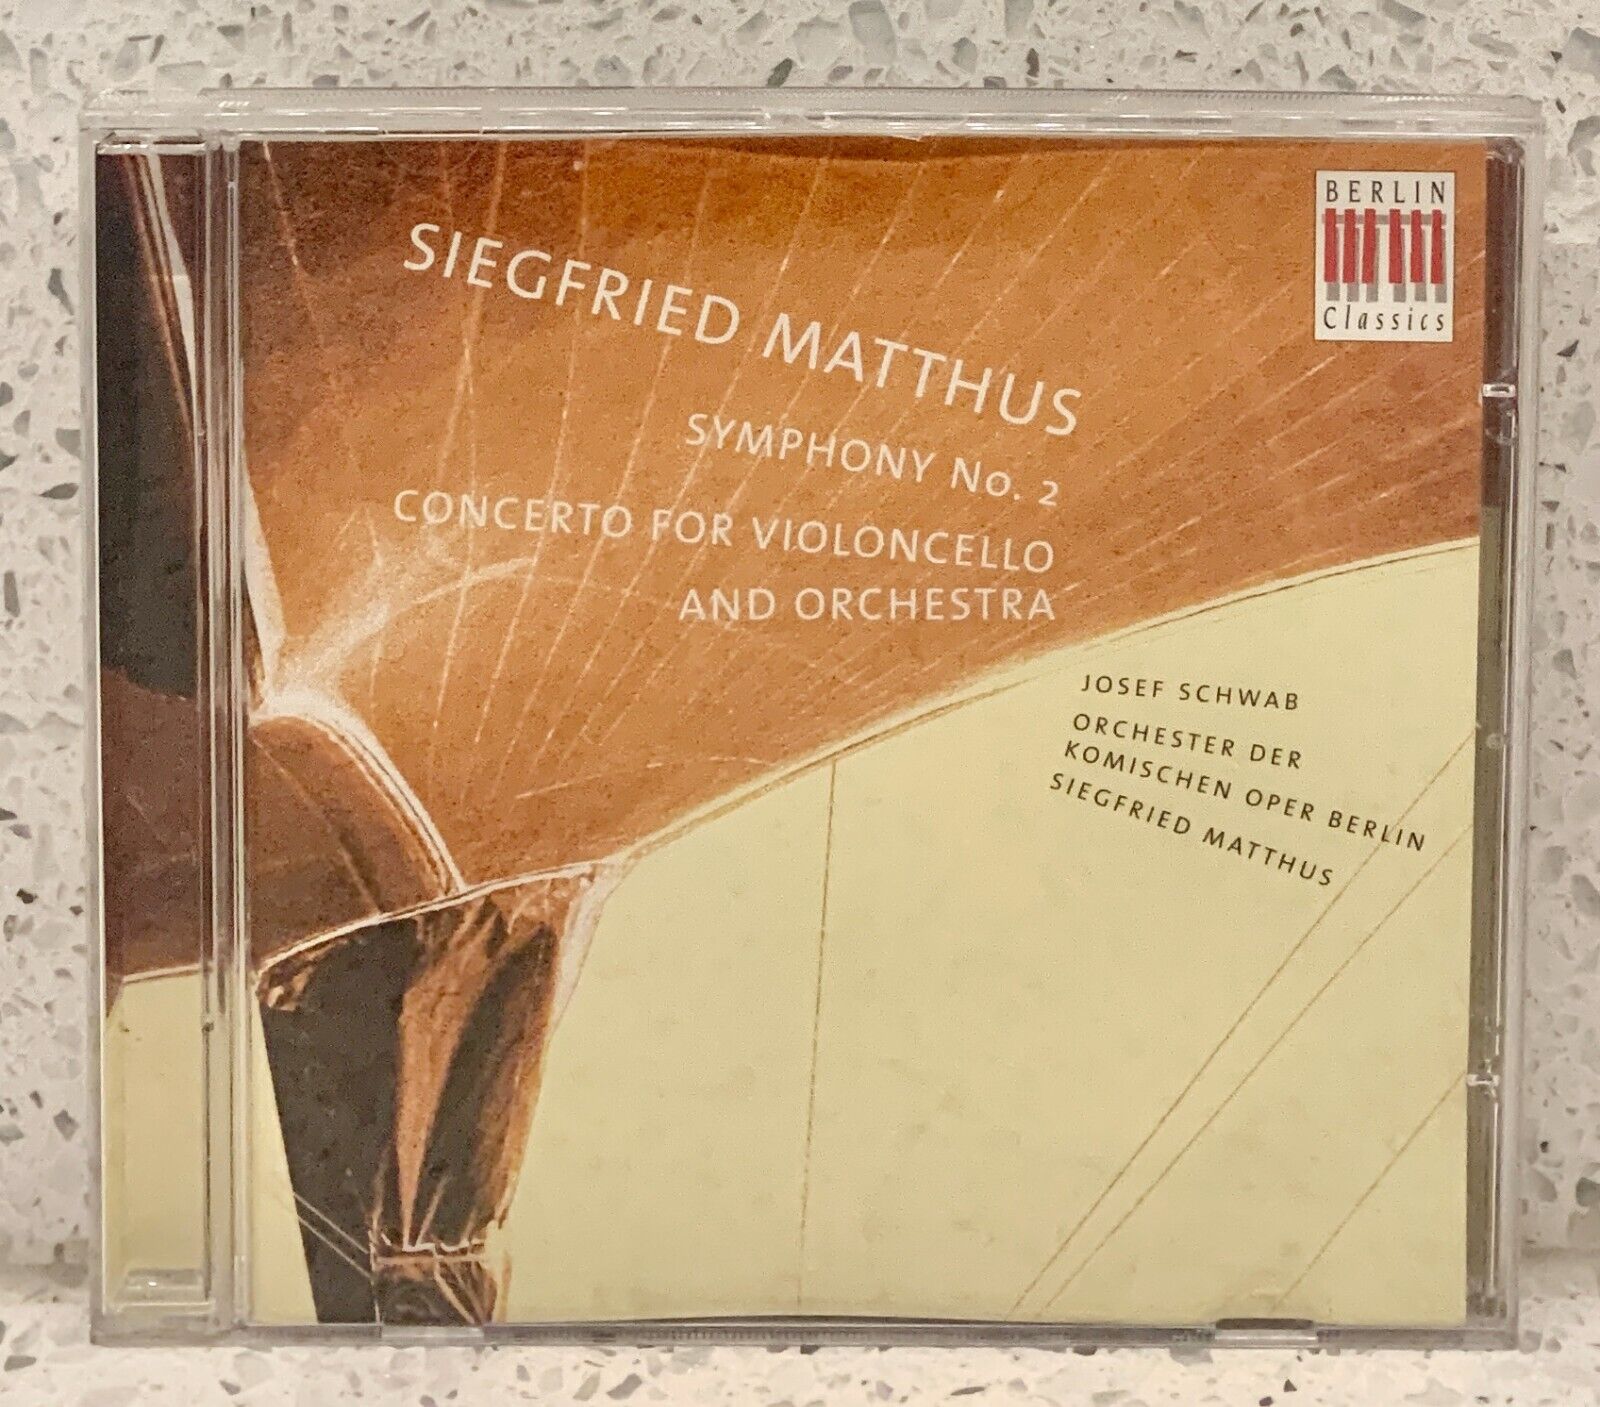 SIEGFRIED MATTHUS Symphony No 2 (CD Berlin Classics) Cello Concerto JOSEF SCHWAB